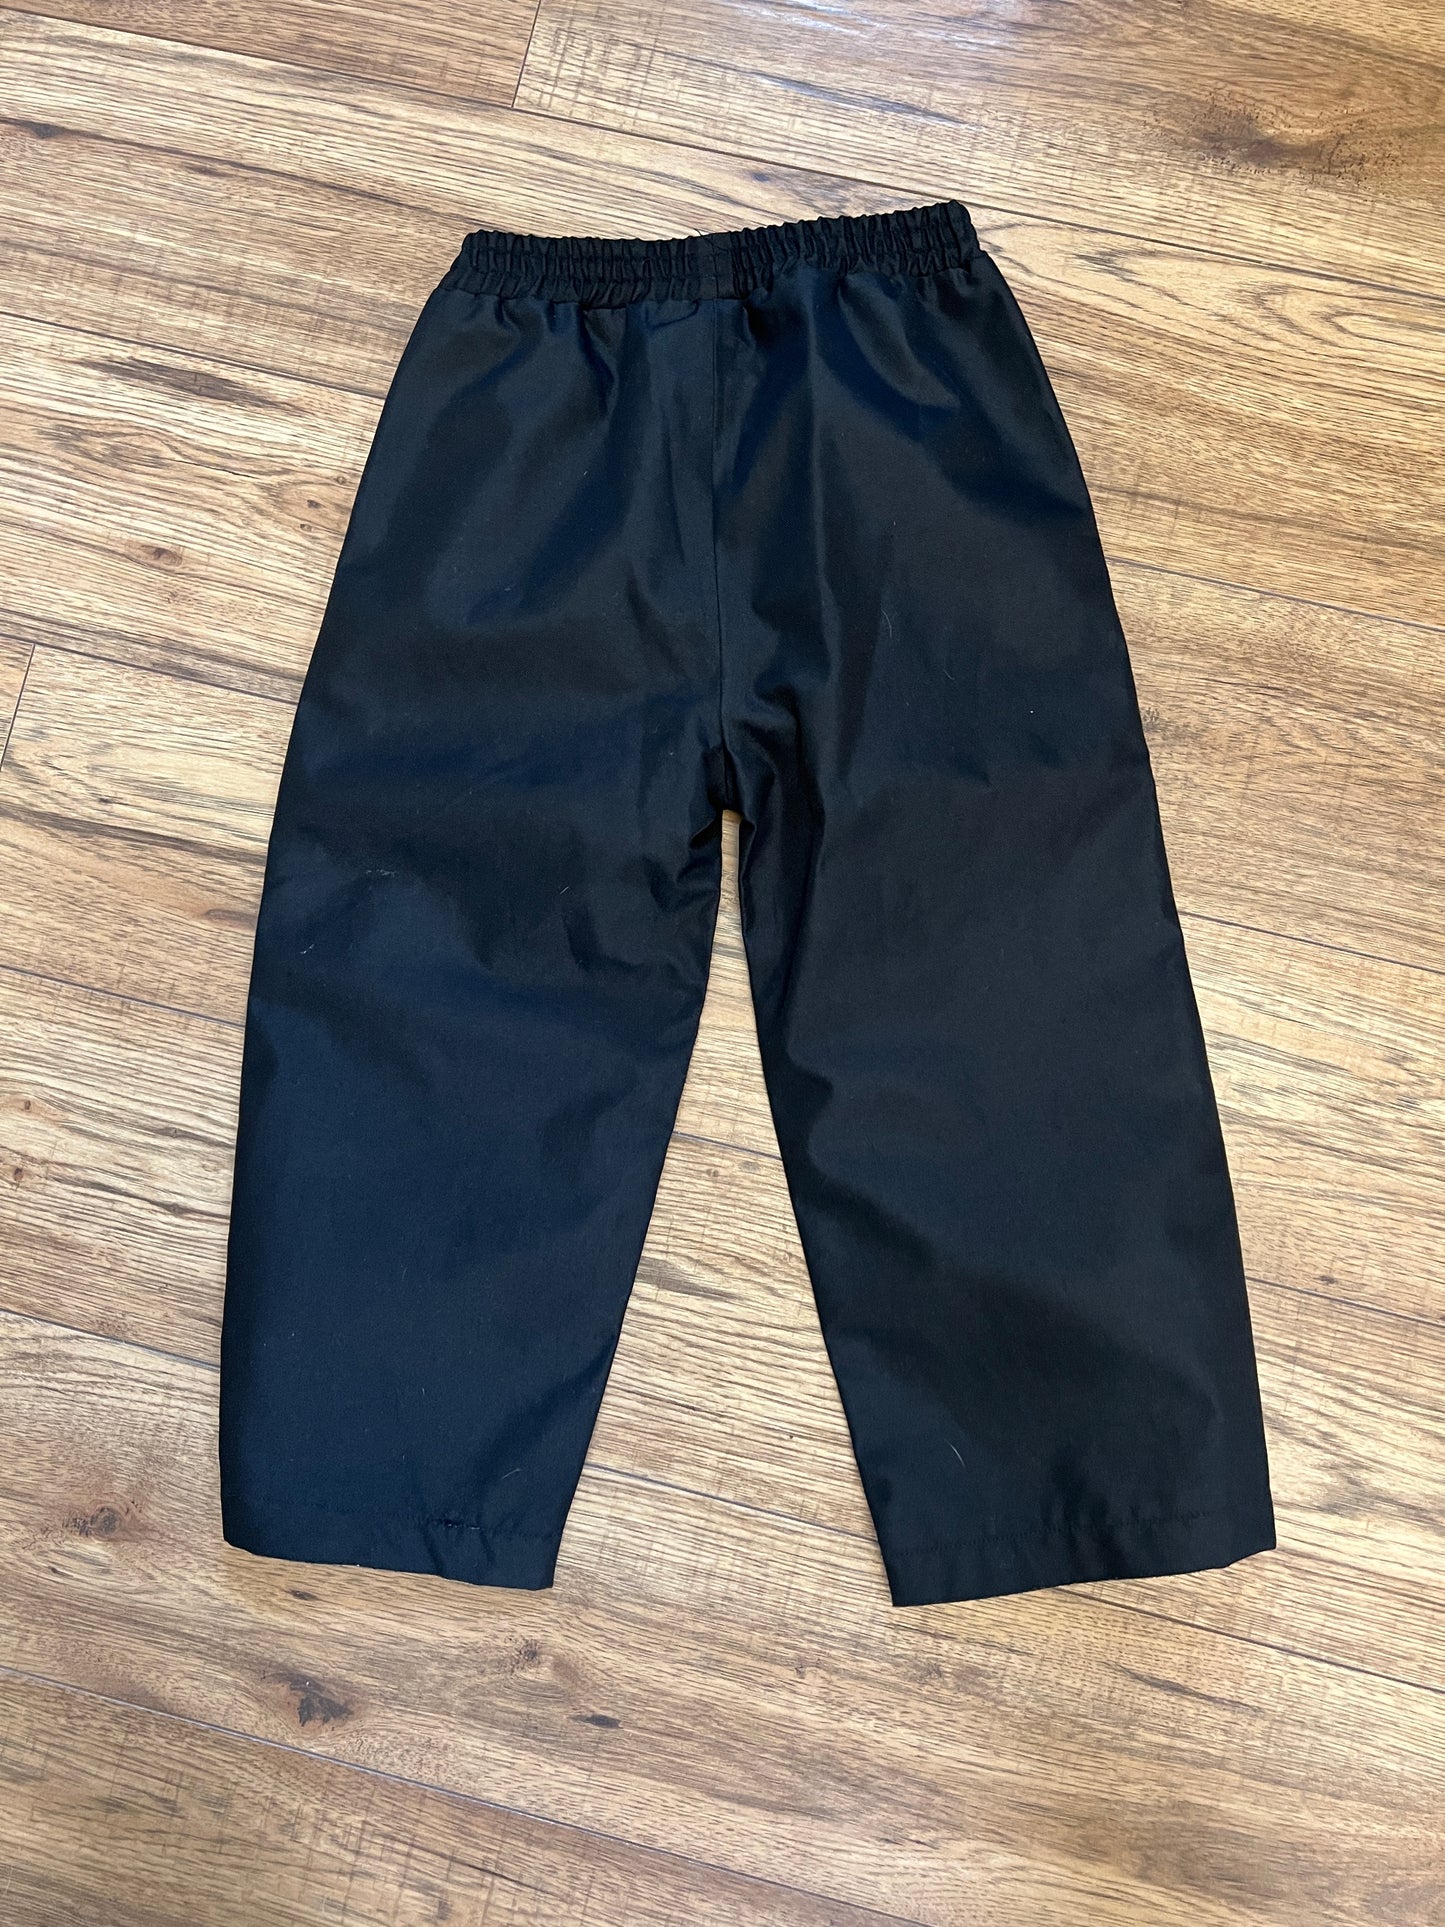 Rain Pants Child Size 5 Oakiwear Black Like New